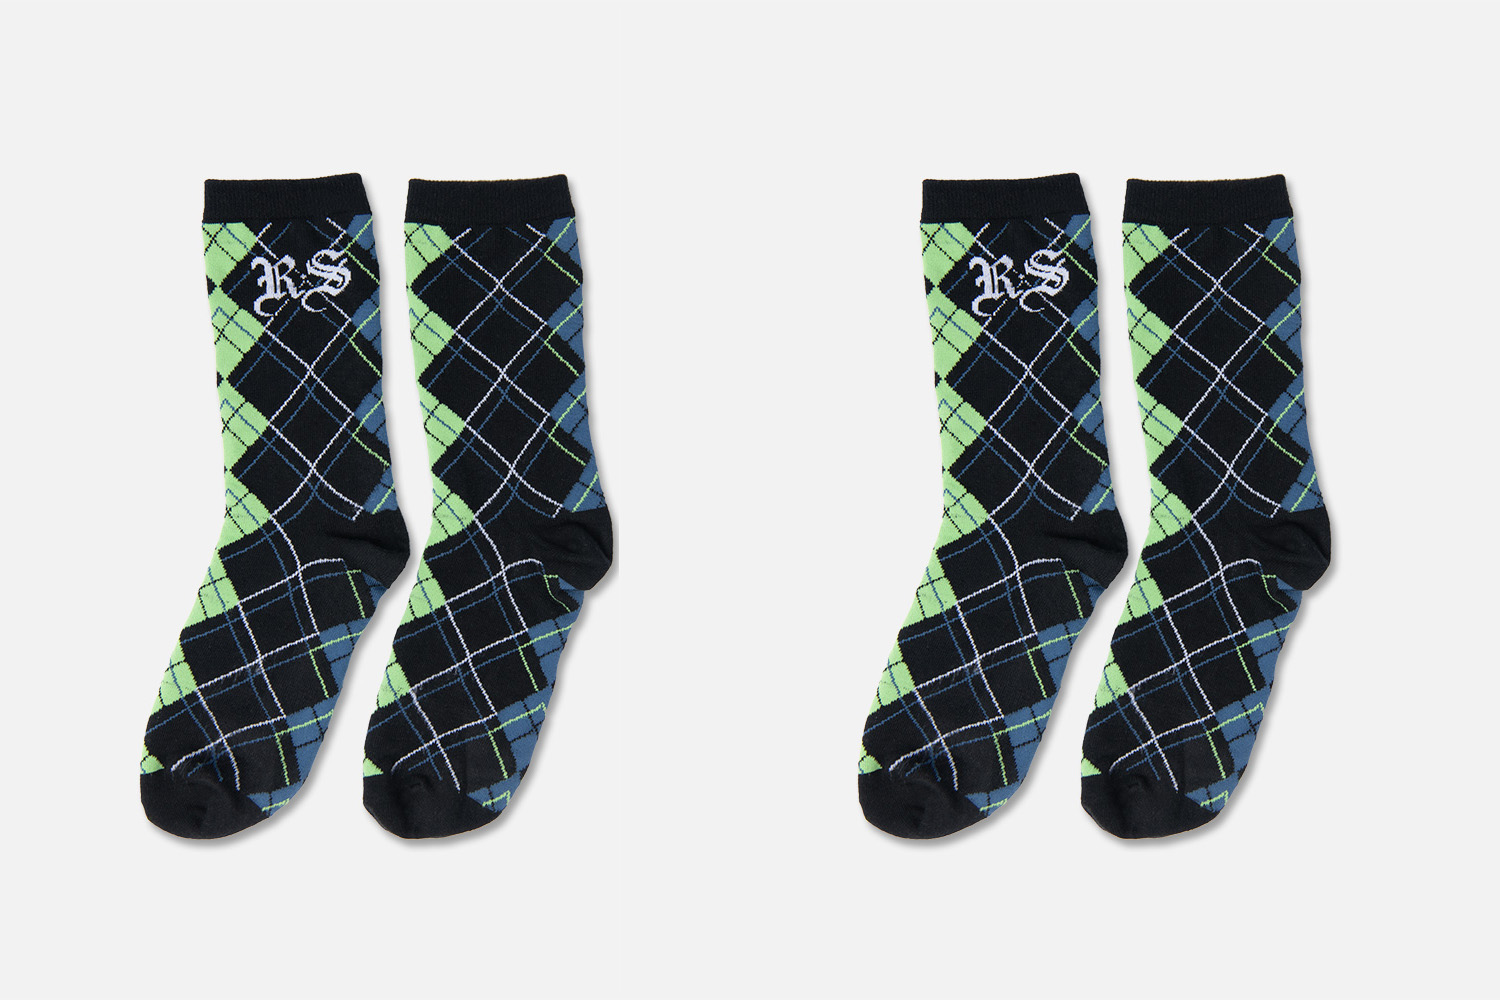 Argyle “RS” socks